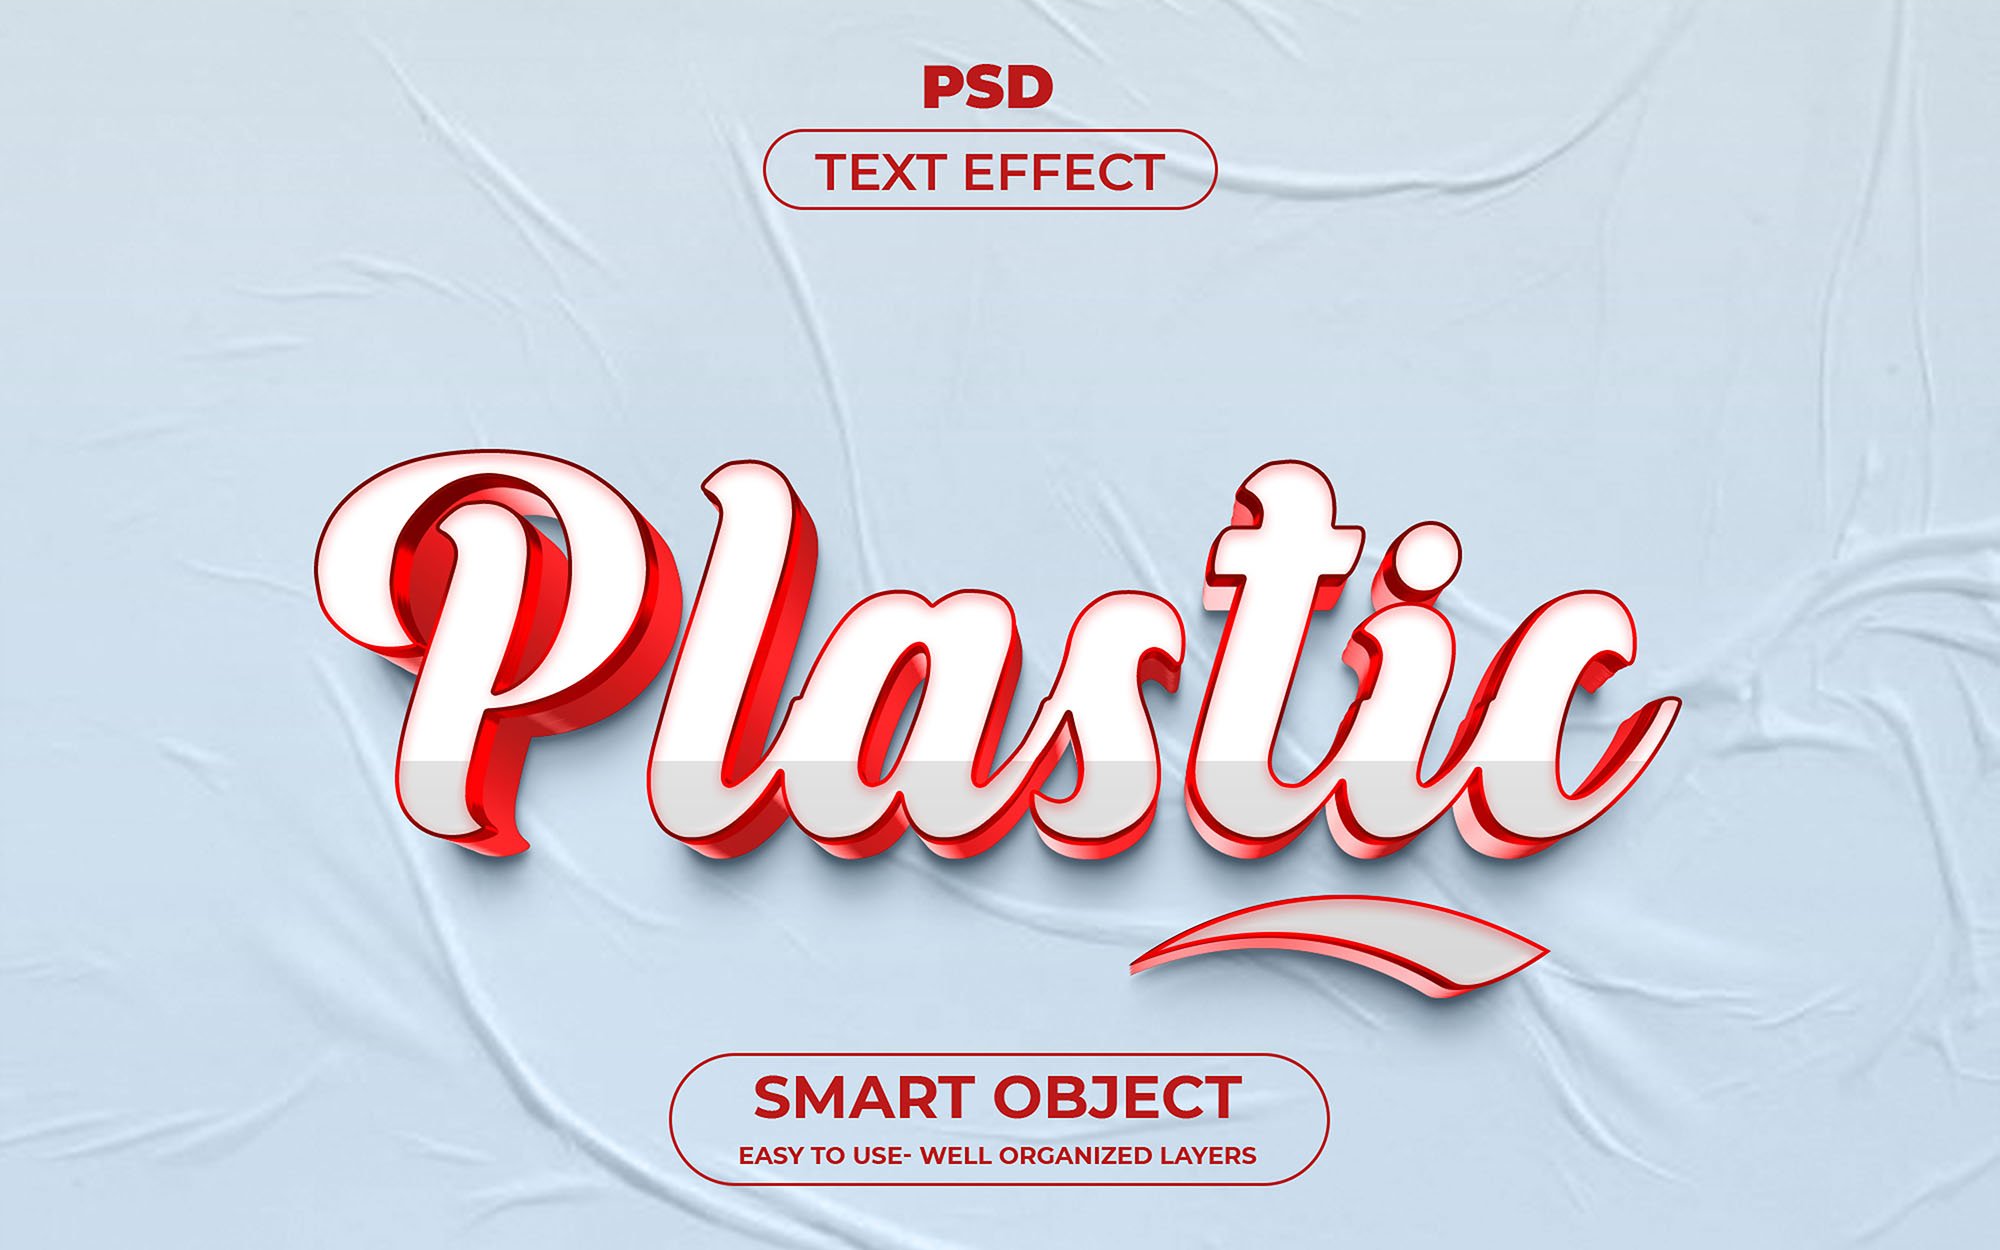 Plastic 3D Editable psd Text Effectcover image.